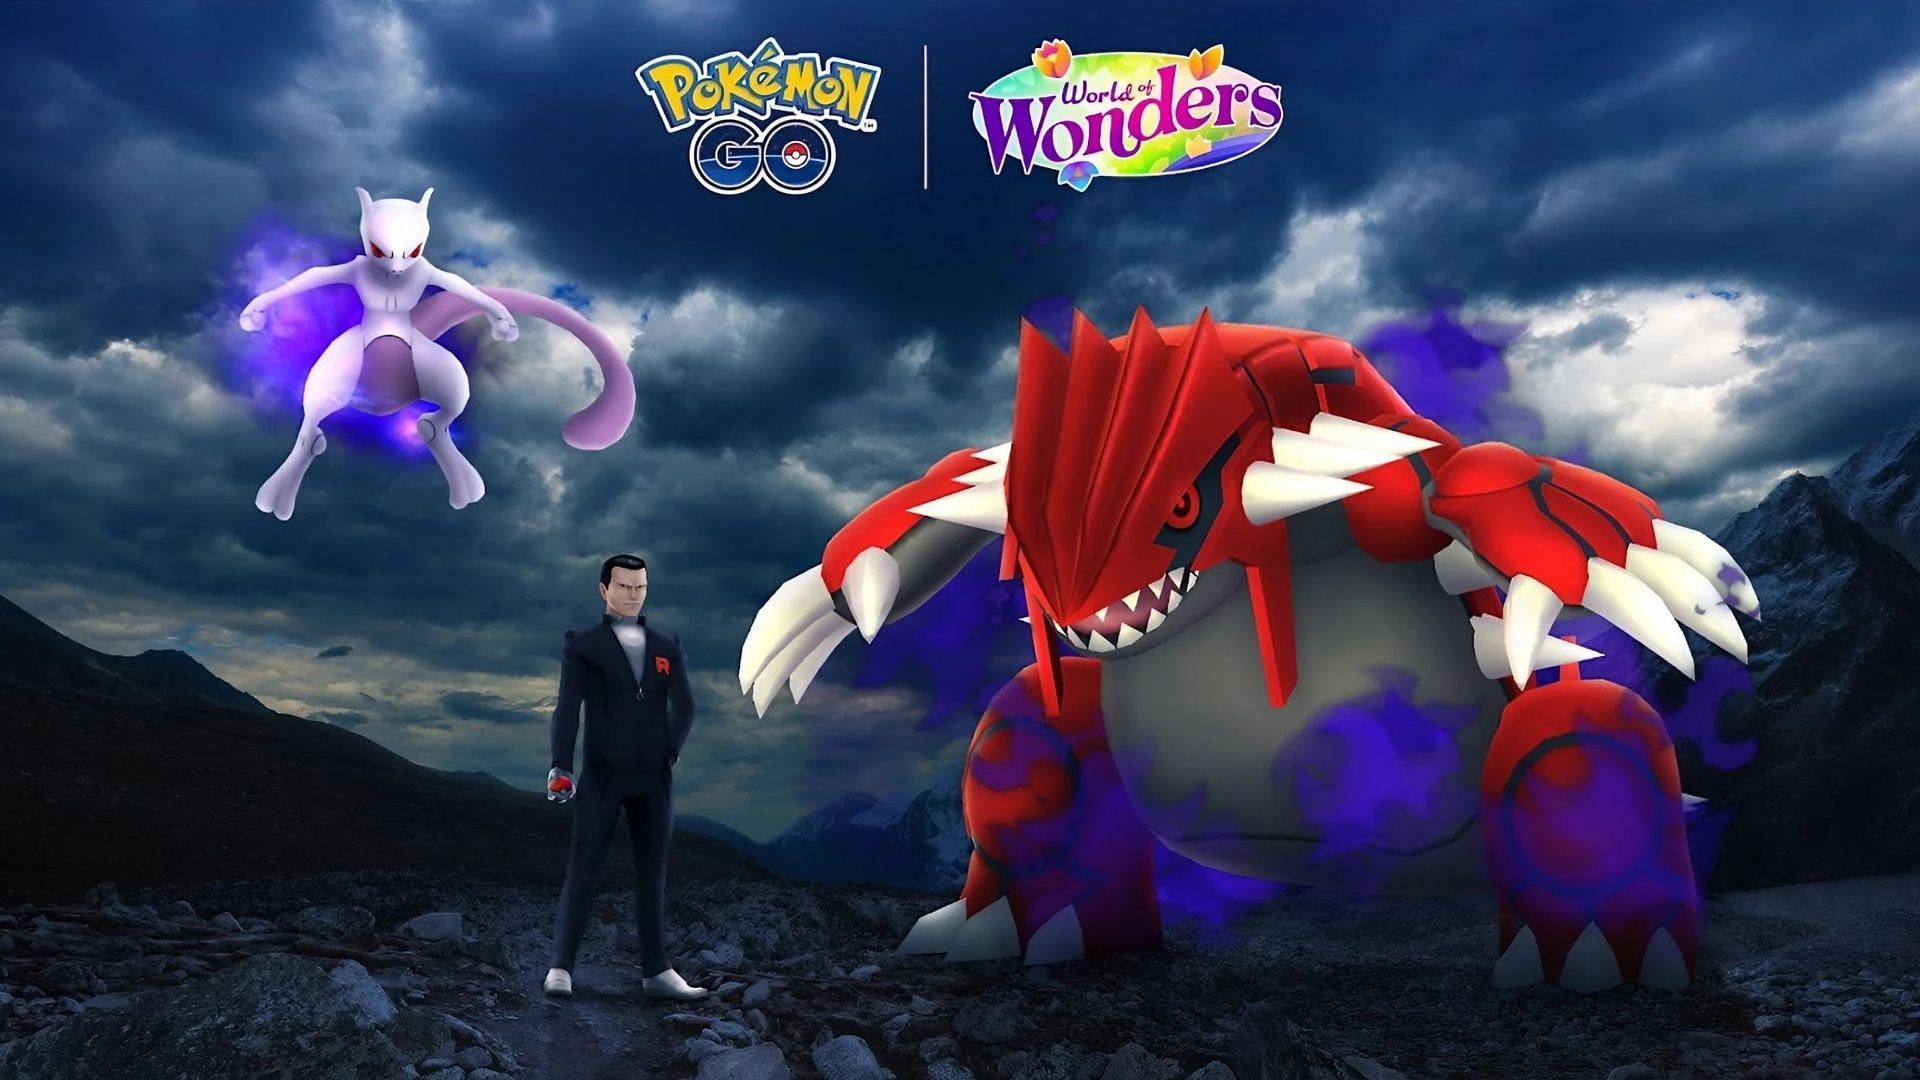 Pokemon GO World of Wonders Taken Over Shadow Mewtwo return, Shadow